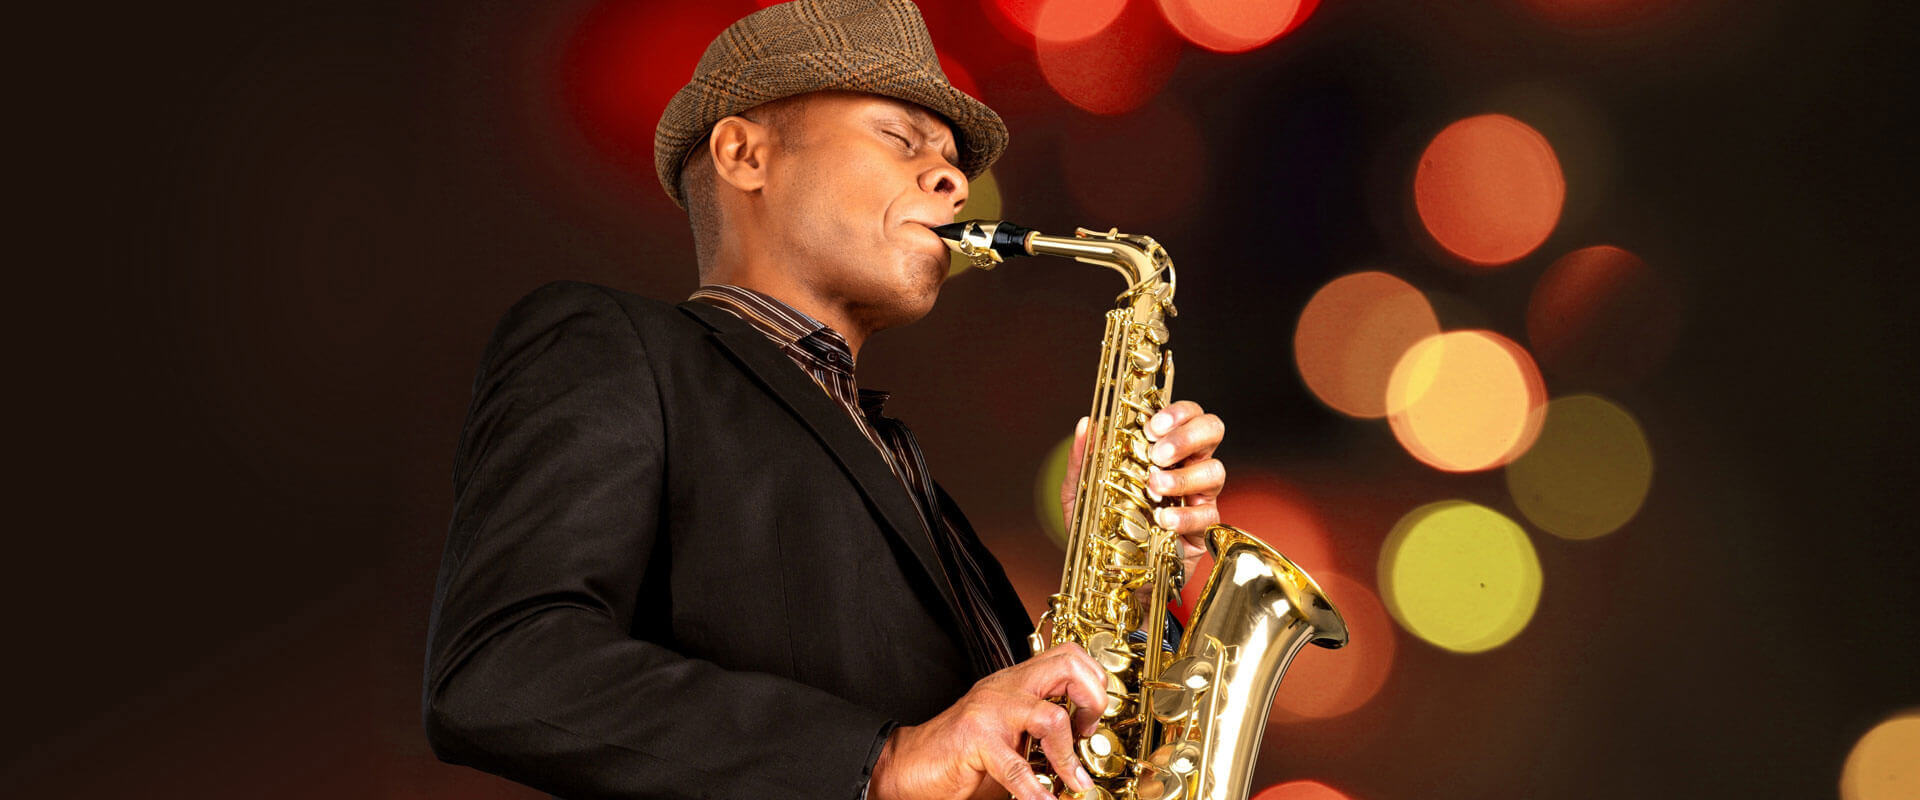 Saxophone Lessons Norfolk, VA